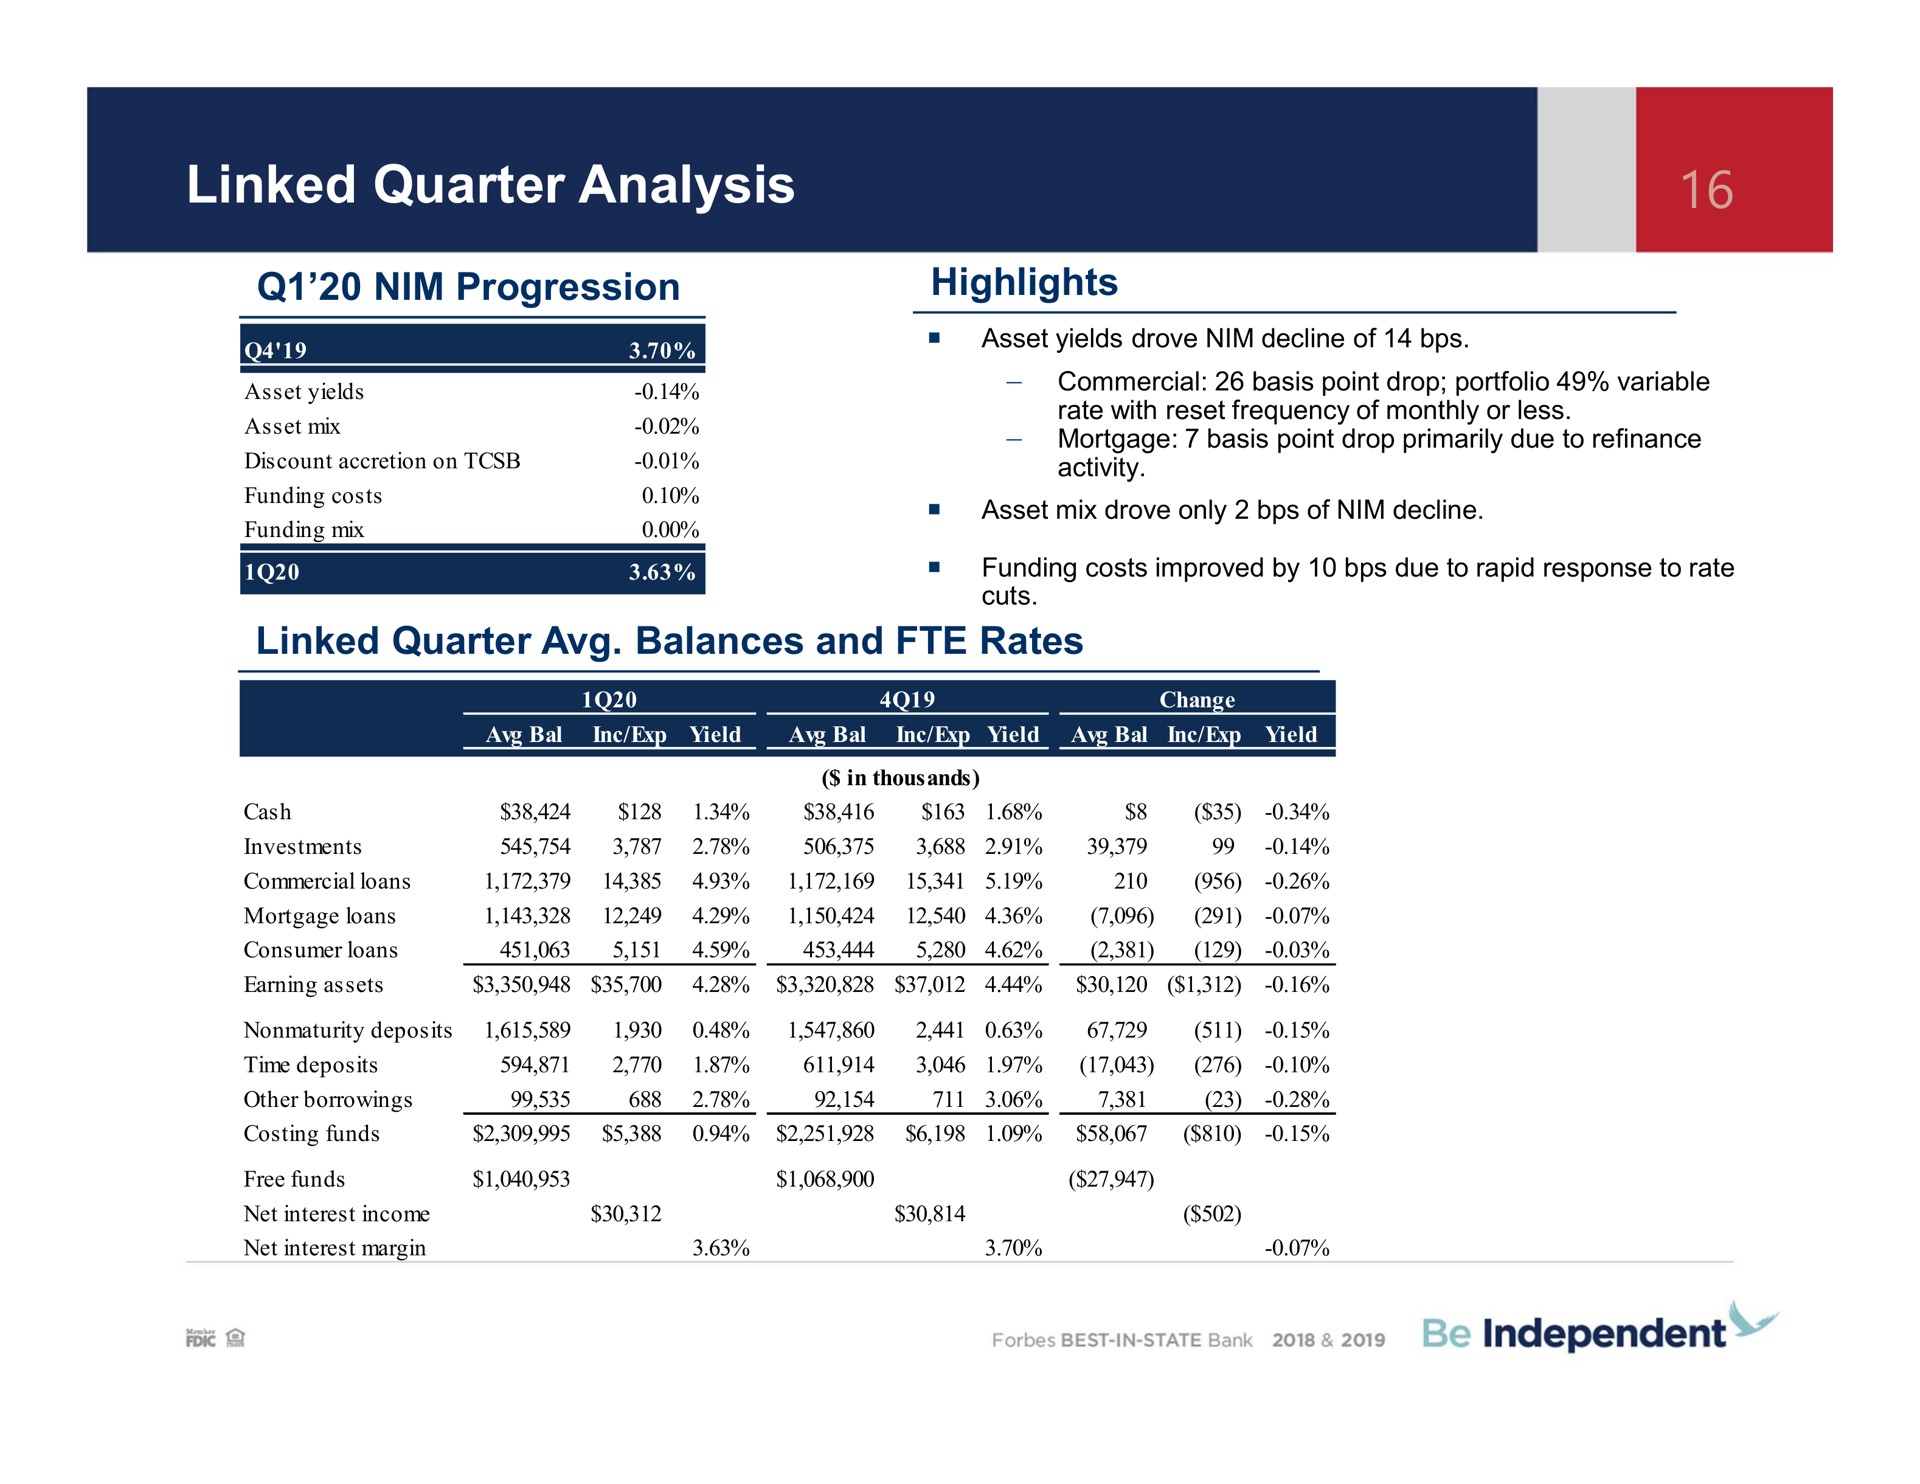 linked quarter analysis nim progression highlights linked quarter balances and rates | Independent Bank Corp